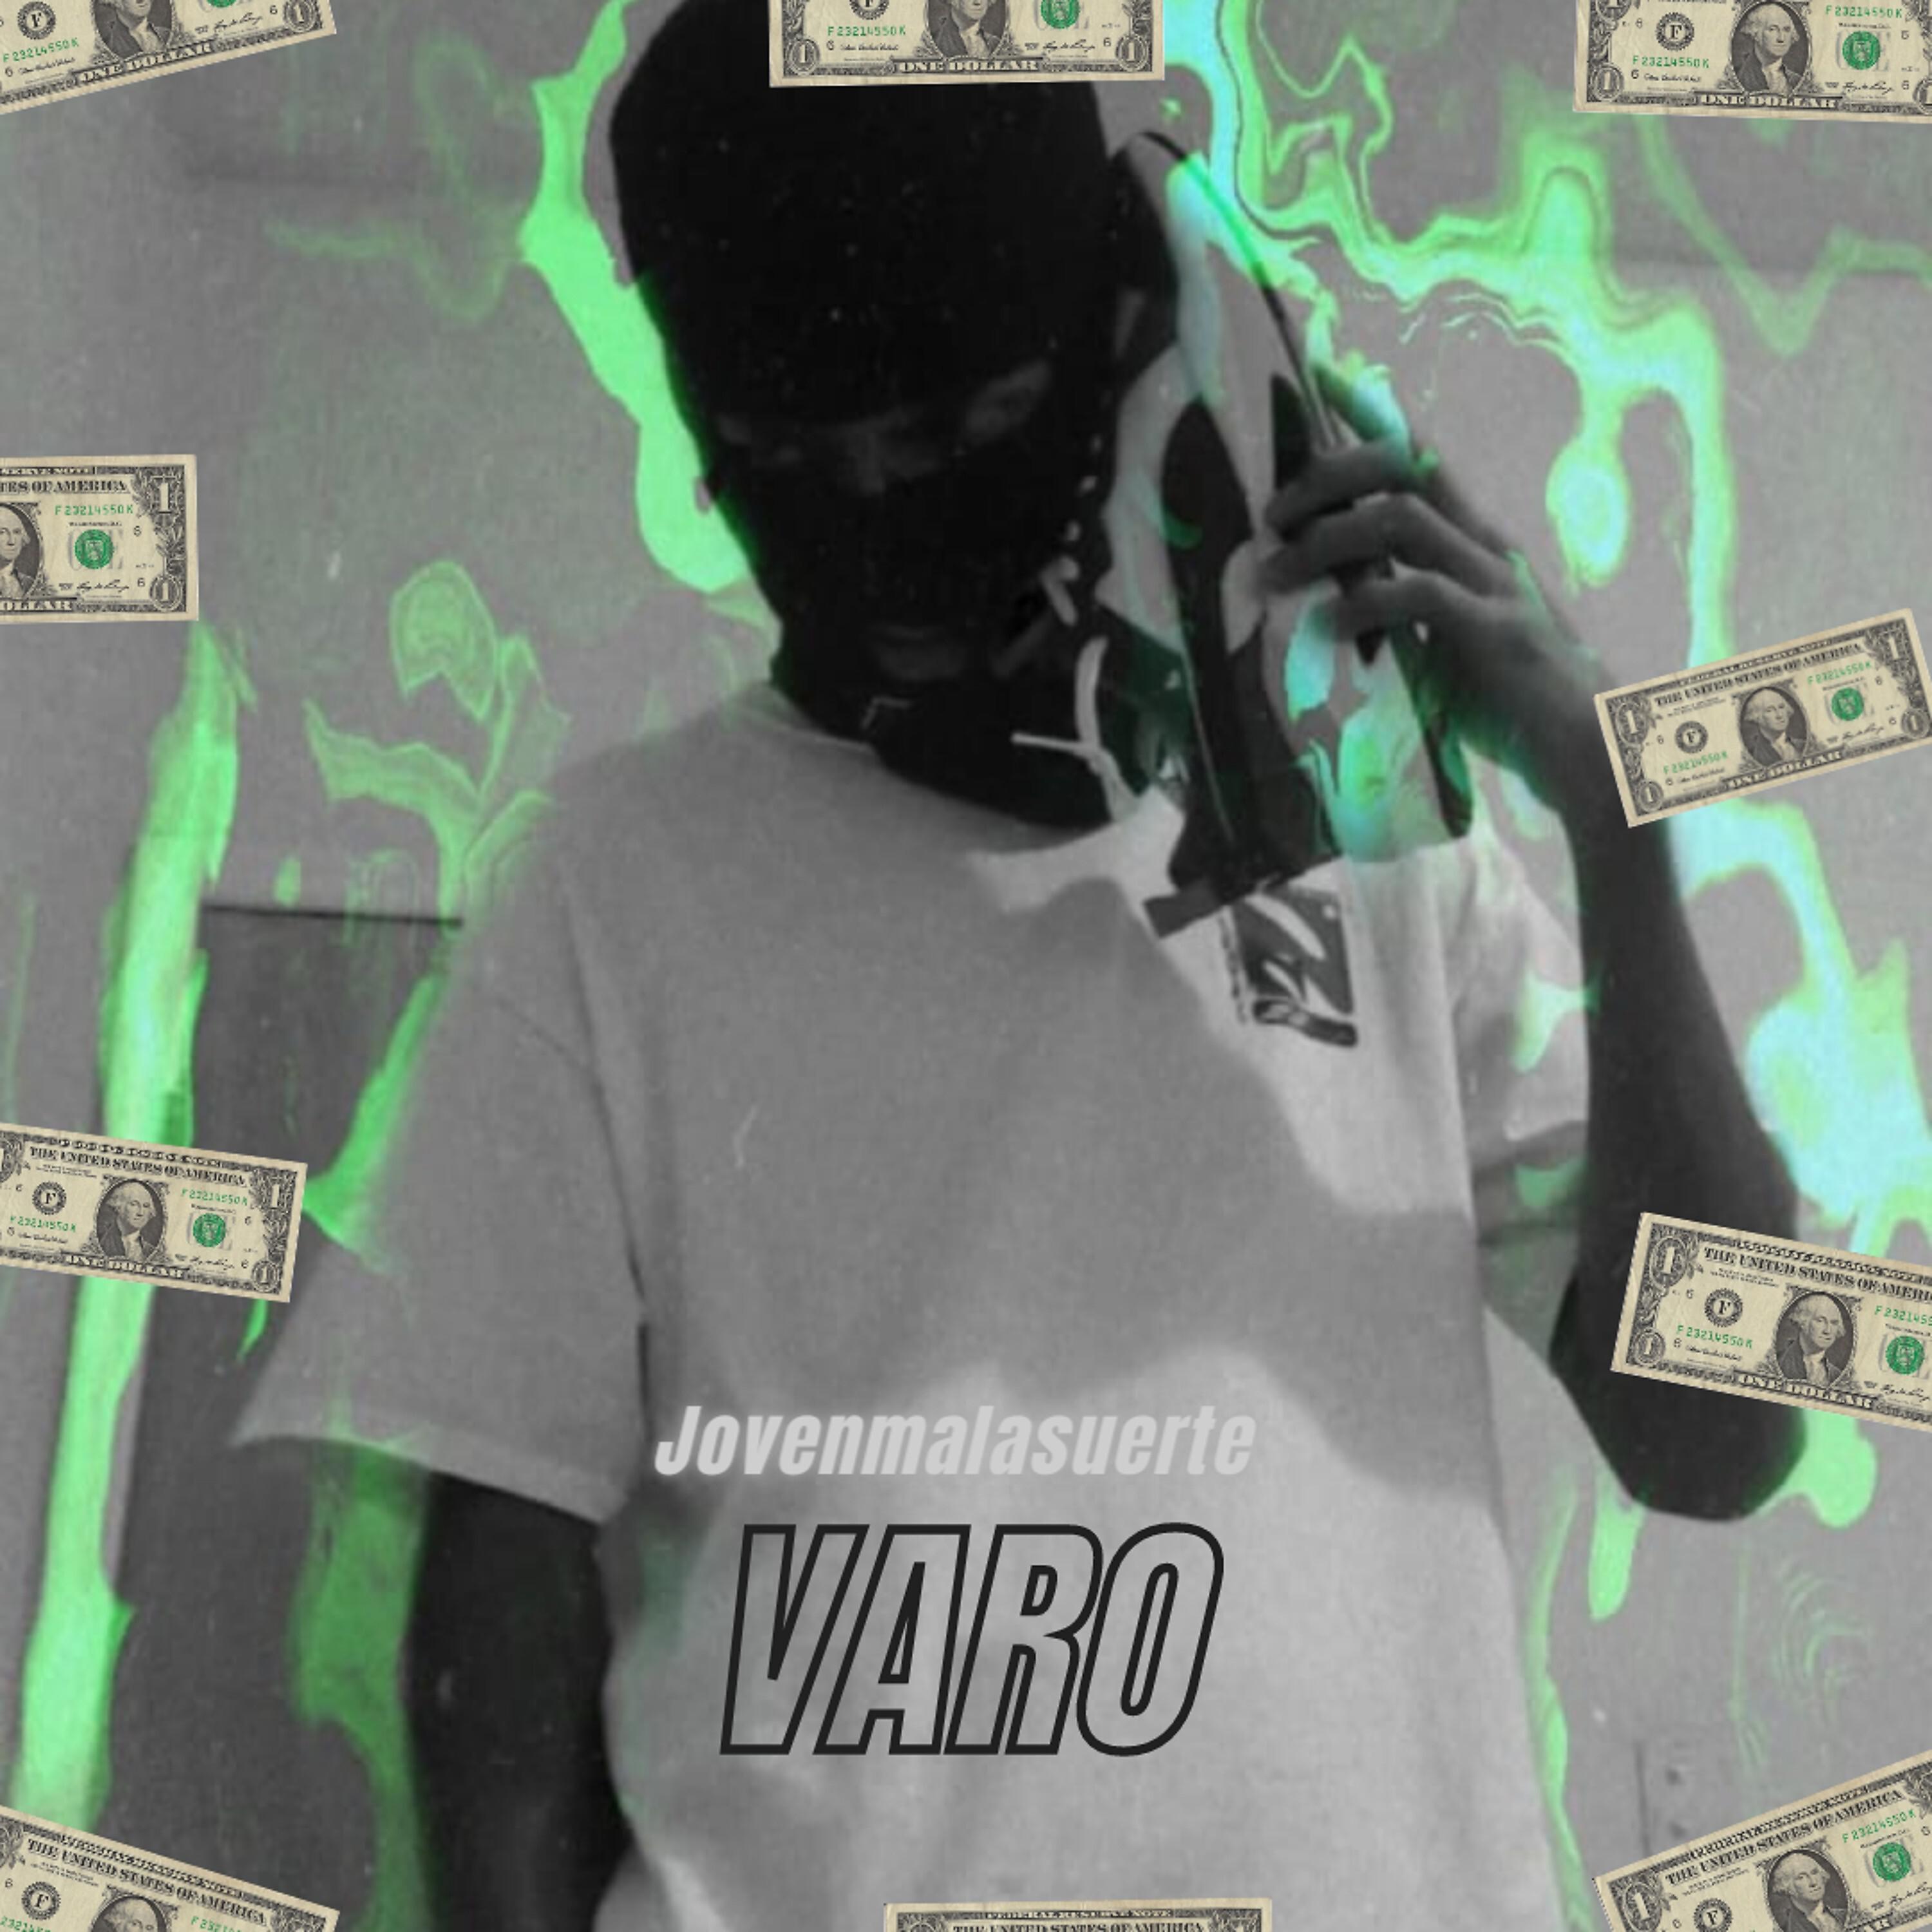 Постер альбома Varo